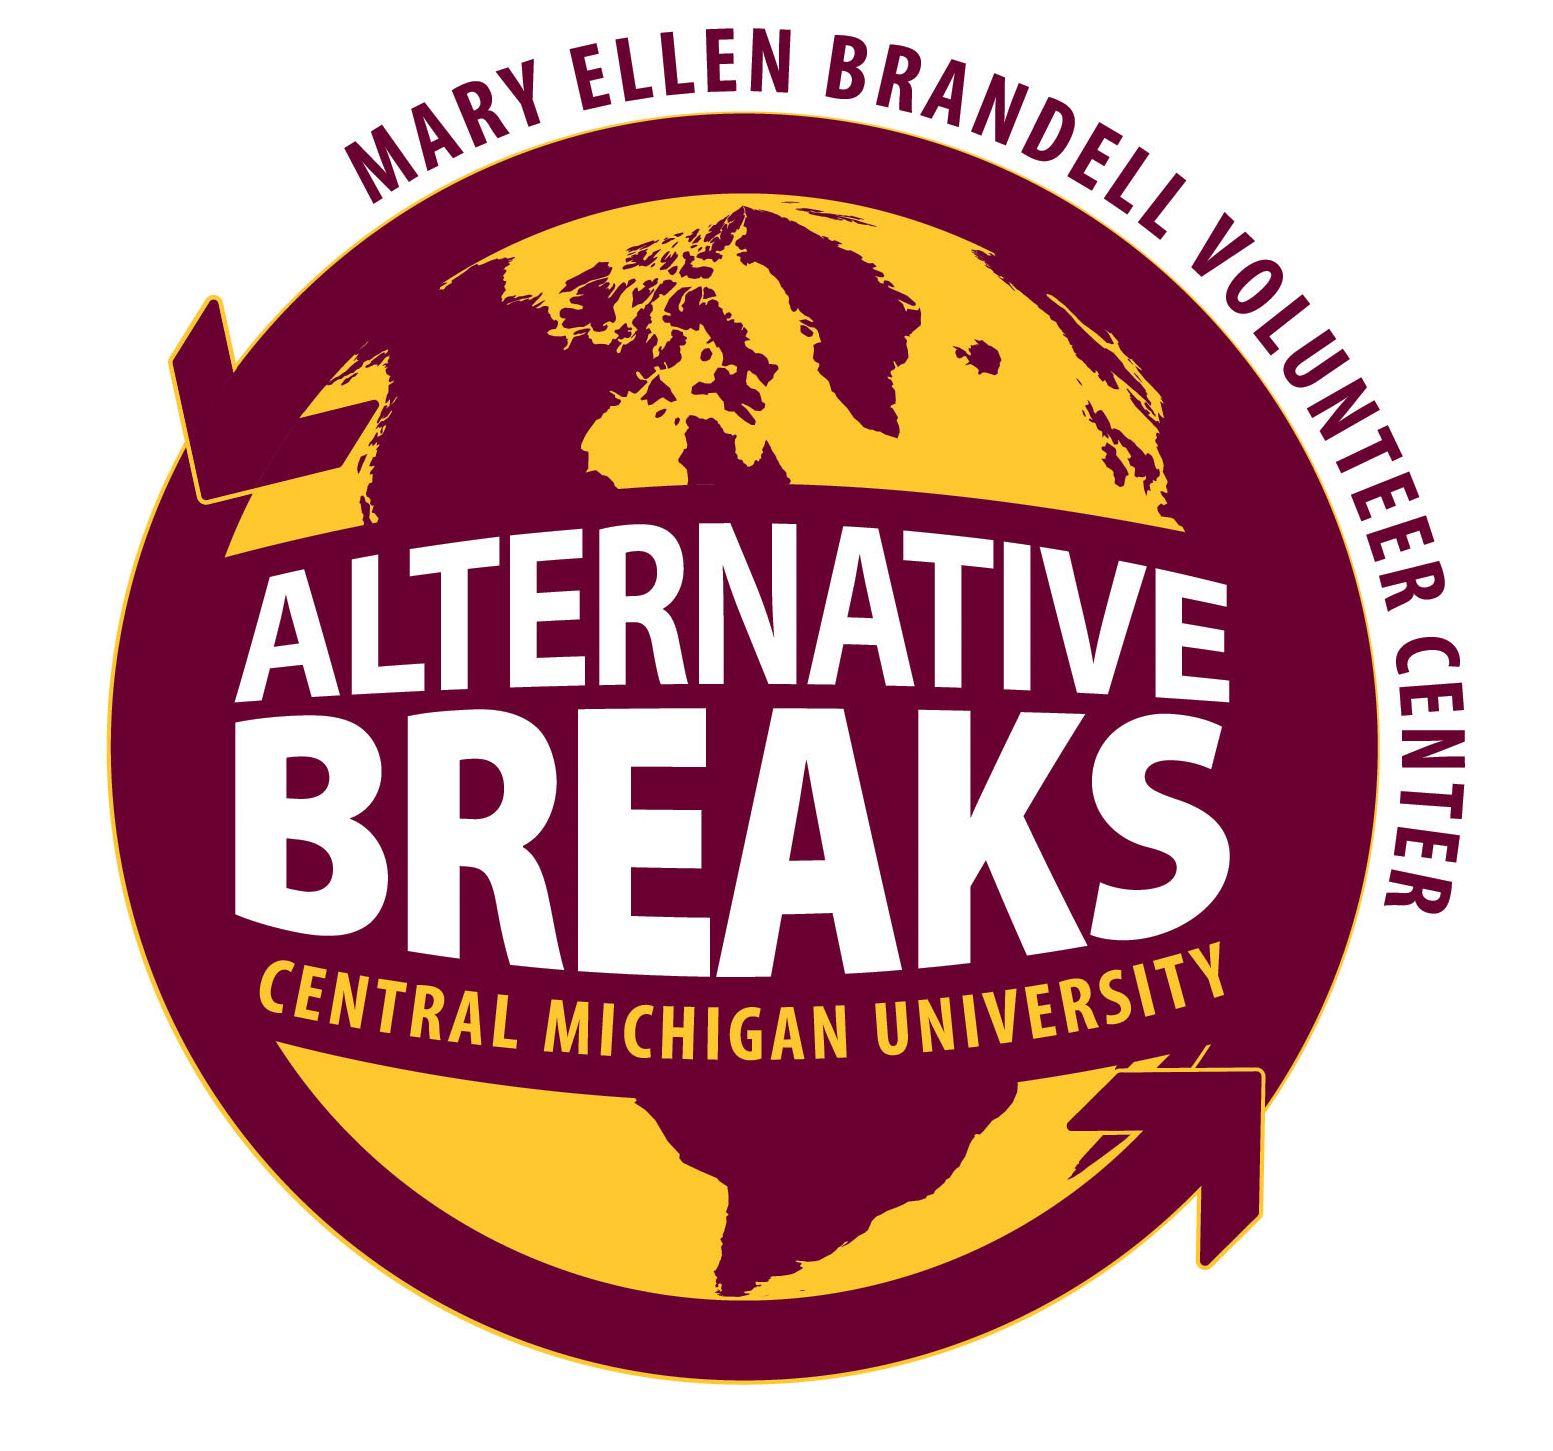 Break Logo - Alternative Breaks. Central Michigan University